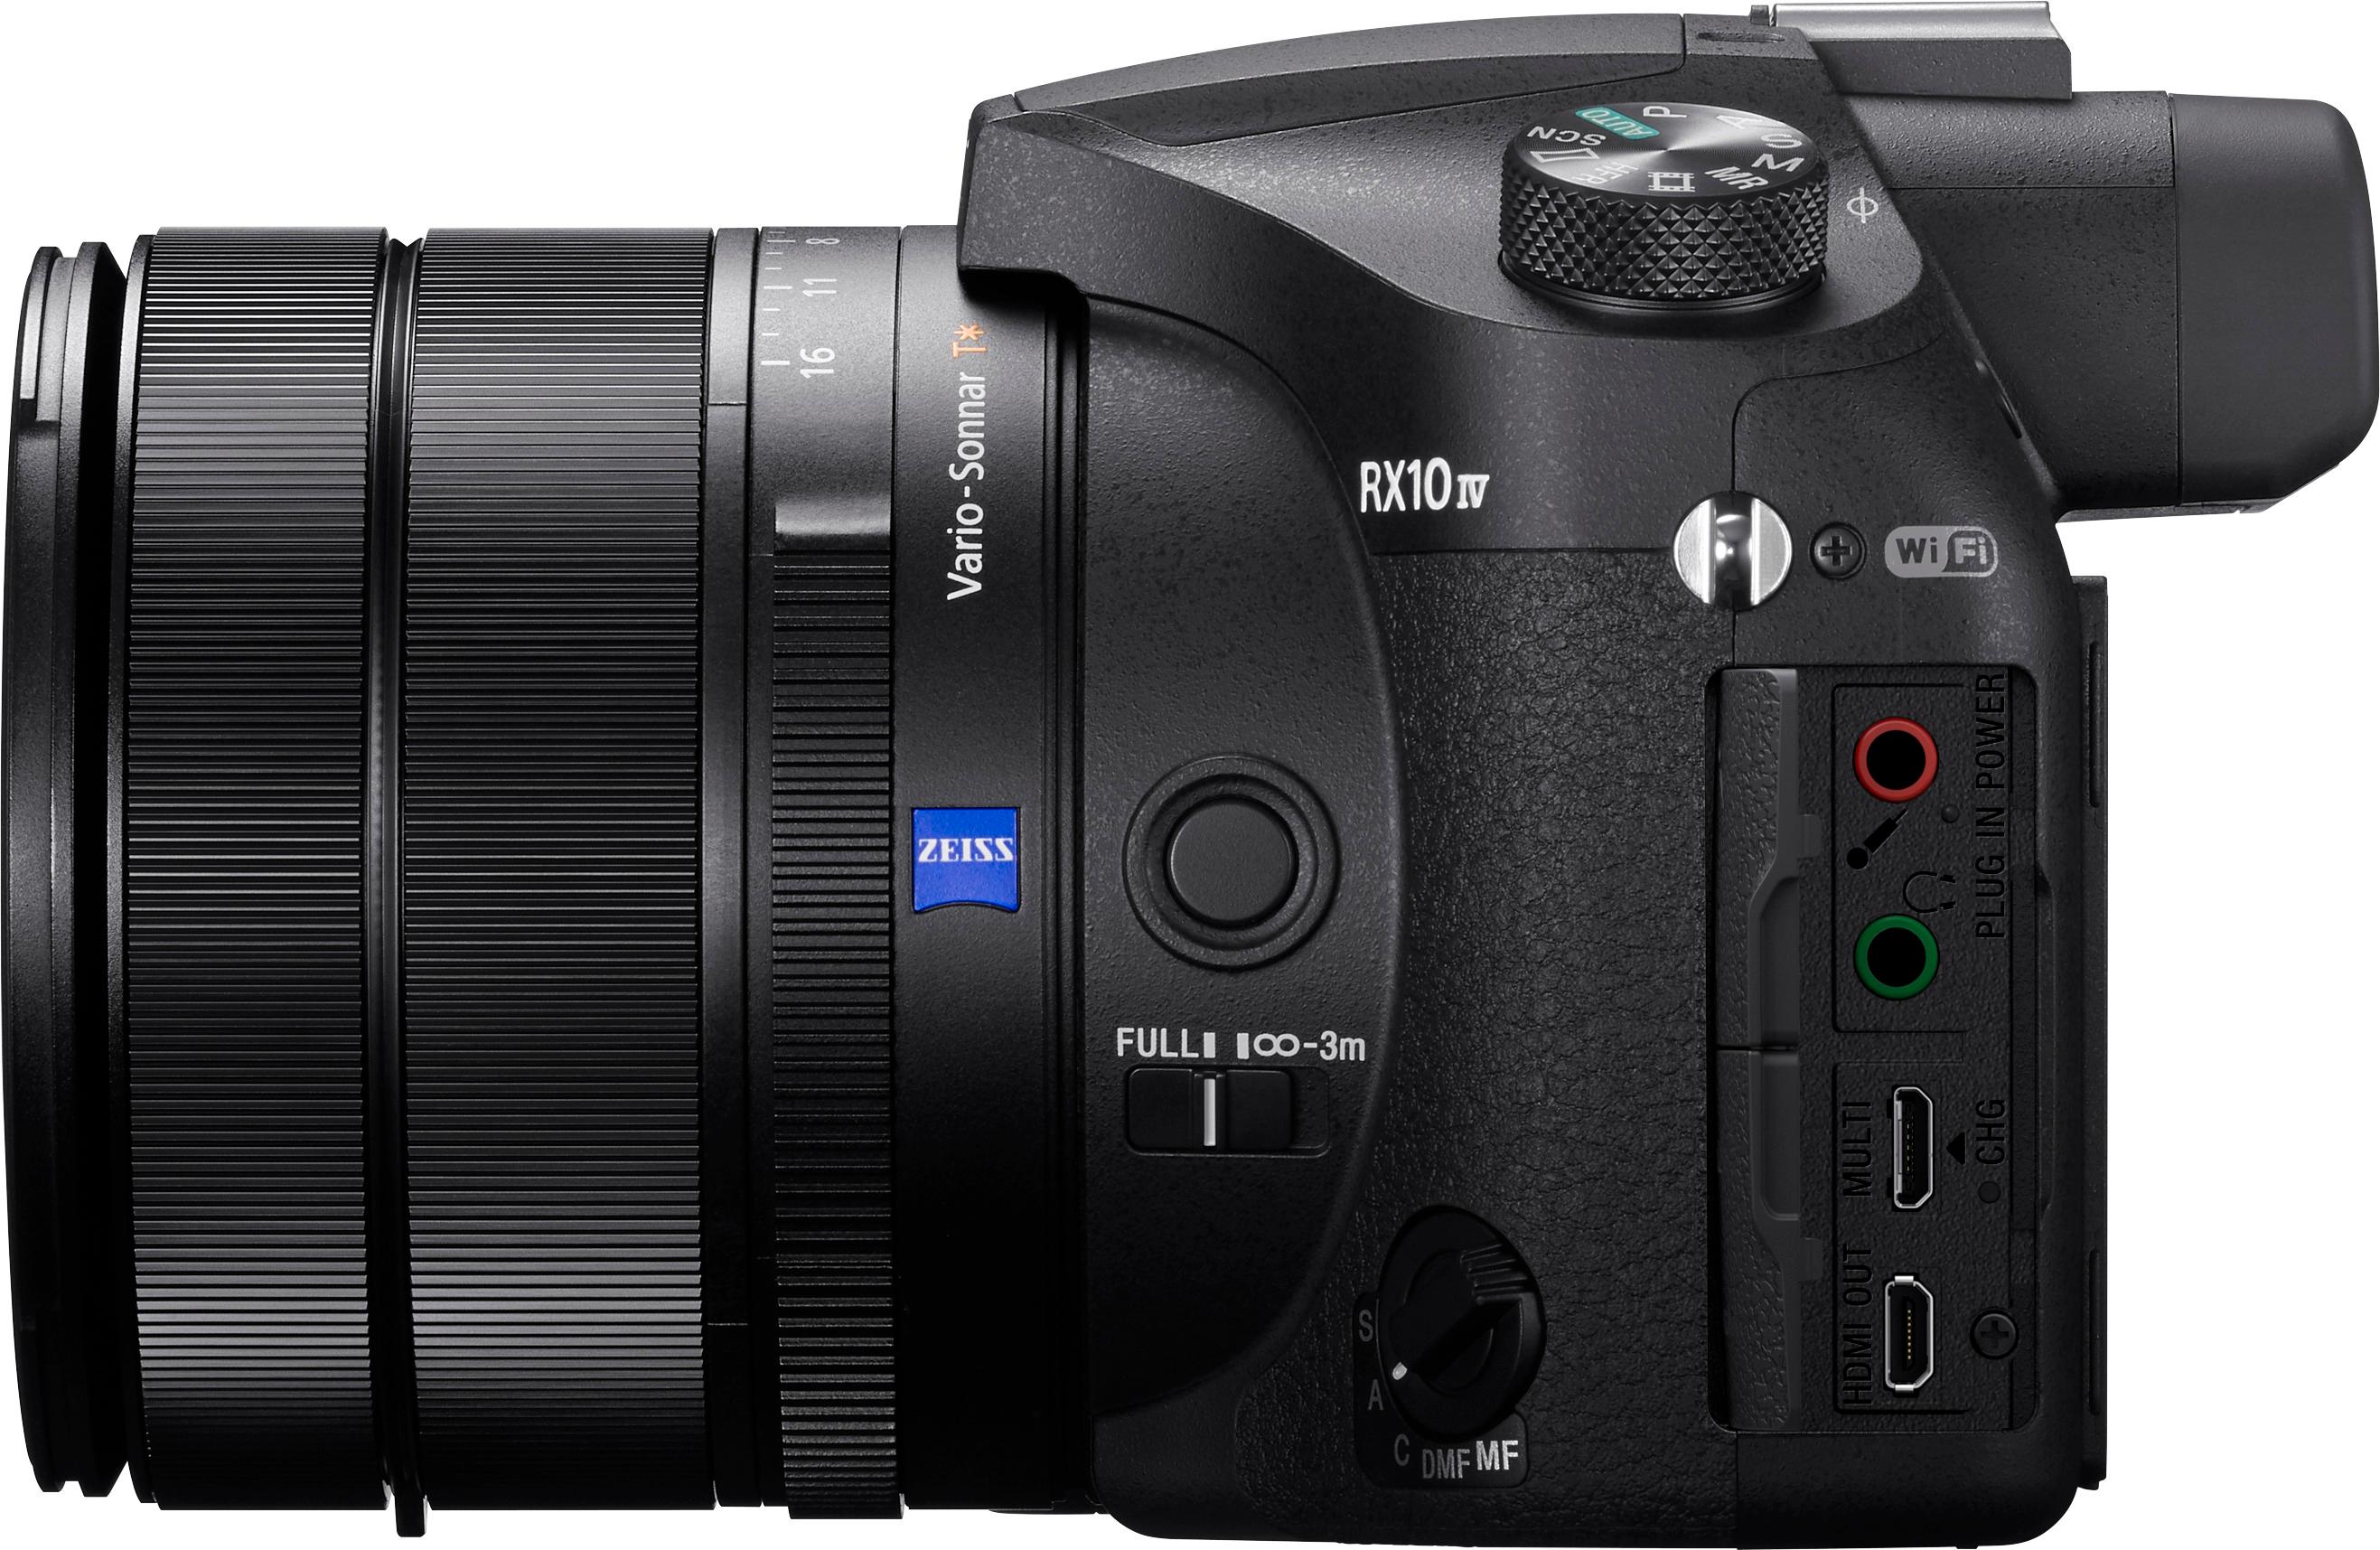 Brand New Sony Cyber-shot DSC-RX10 IV 20.1-Megapixel Digital Camera